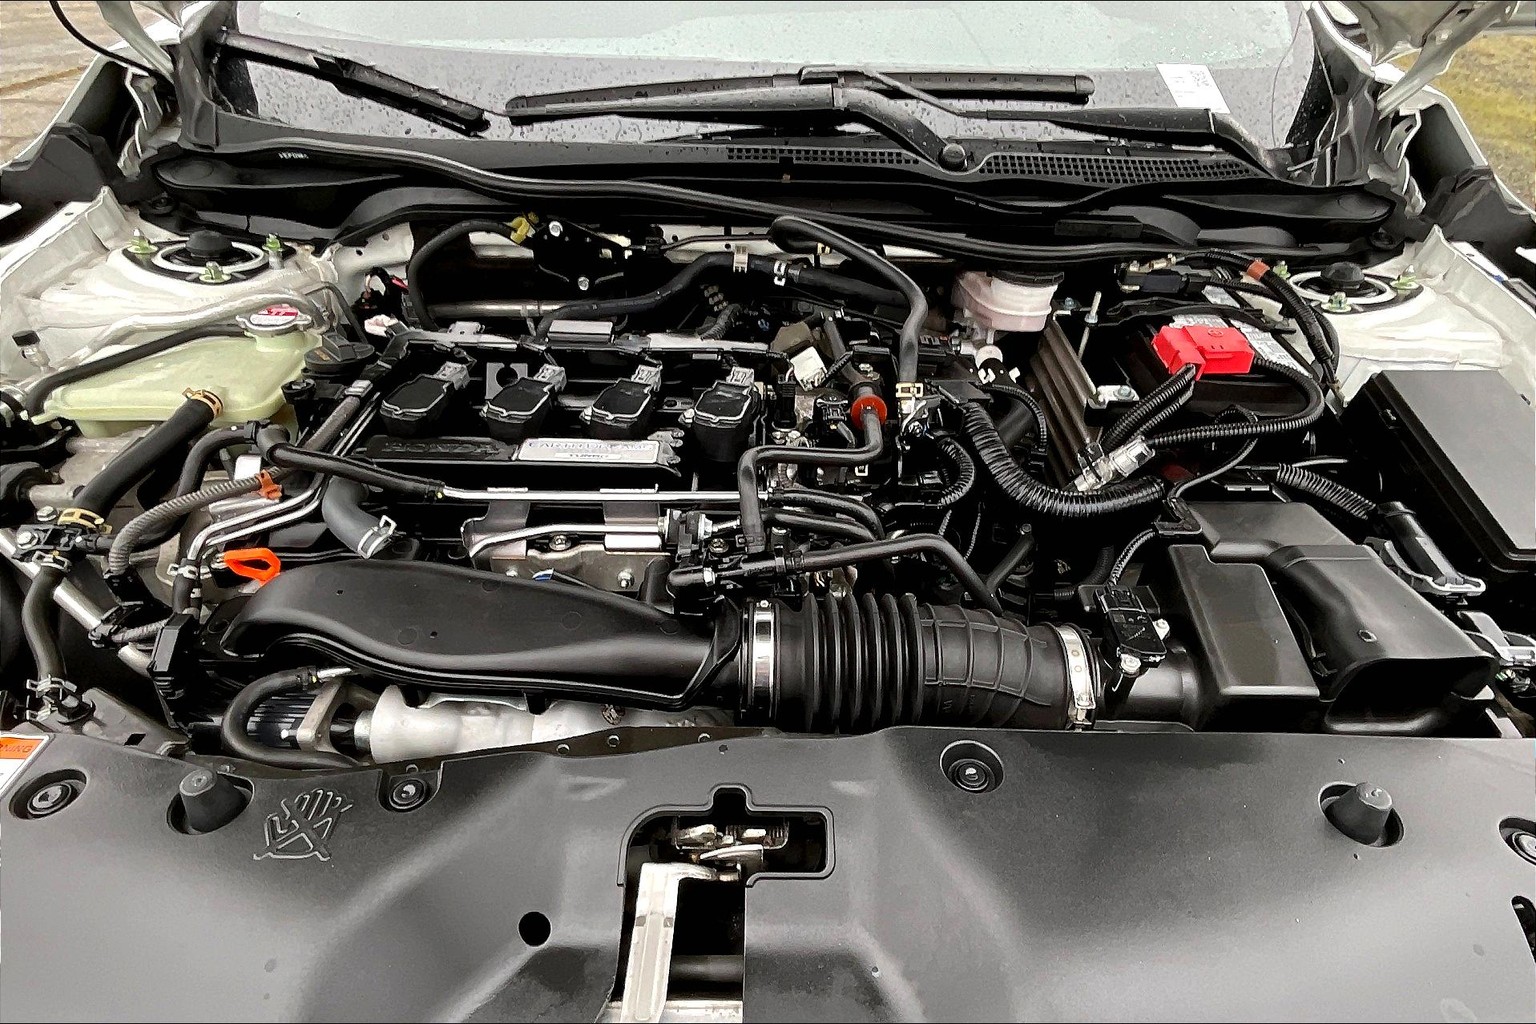 Certified Pre-Owned 2018 Honda Civic Sport 4D Hatchback FWD 6-Speed Manual  in Marysville #JU200443